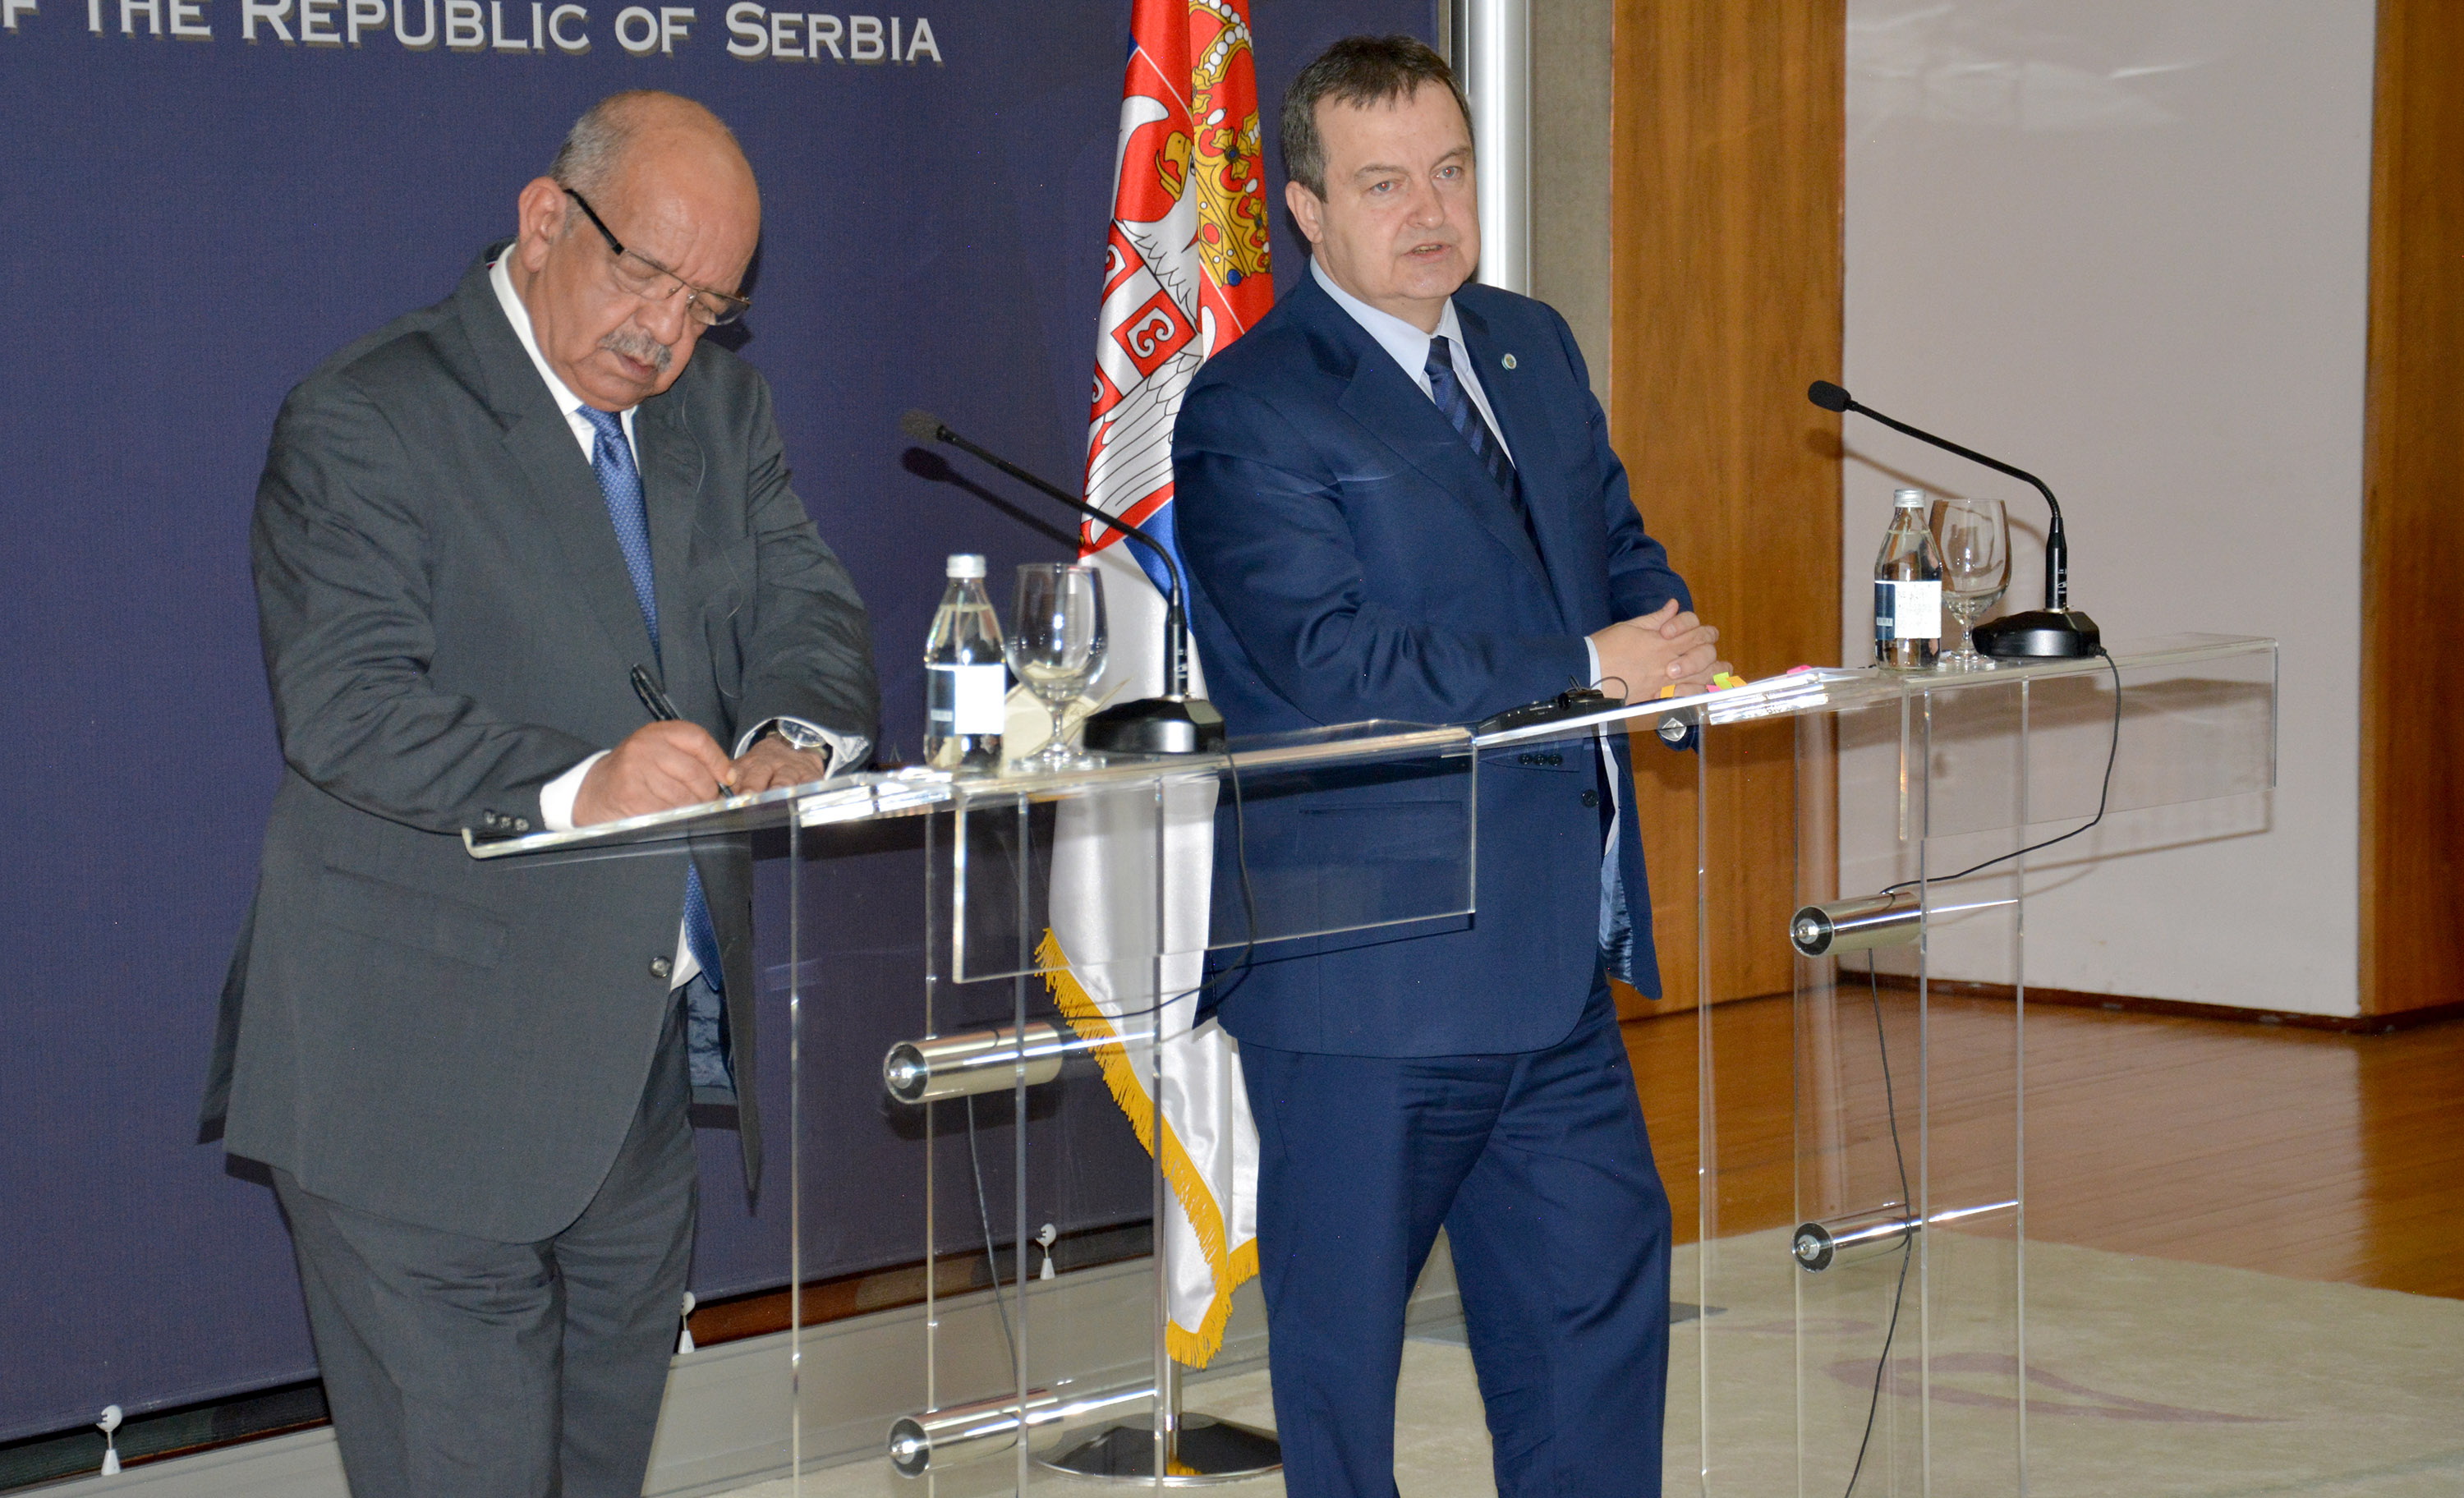 Ivica Dacic and Mr. Abdelkader Messahel